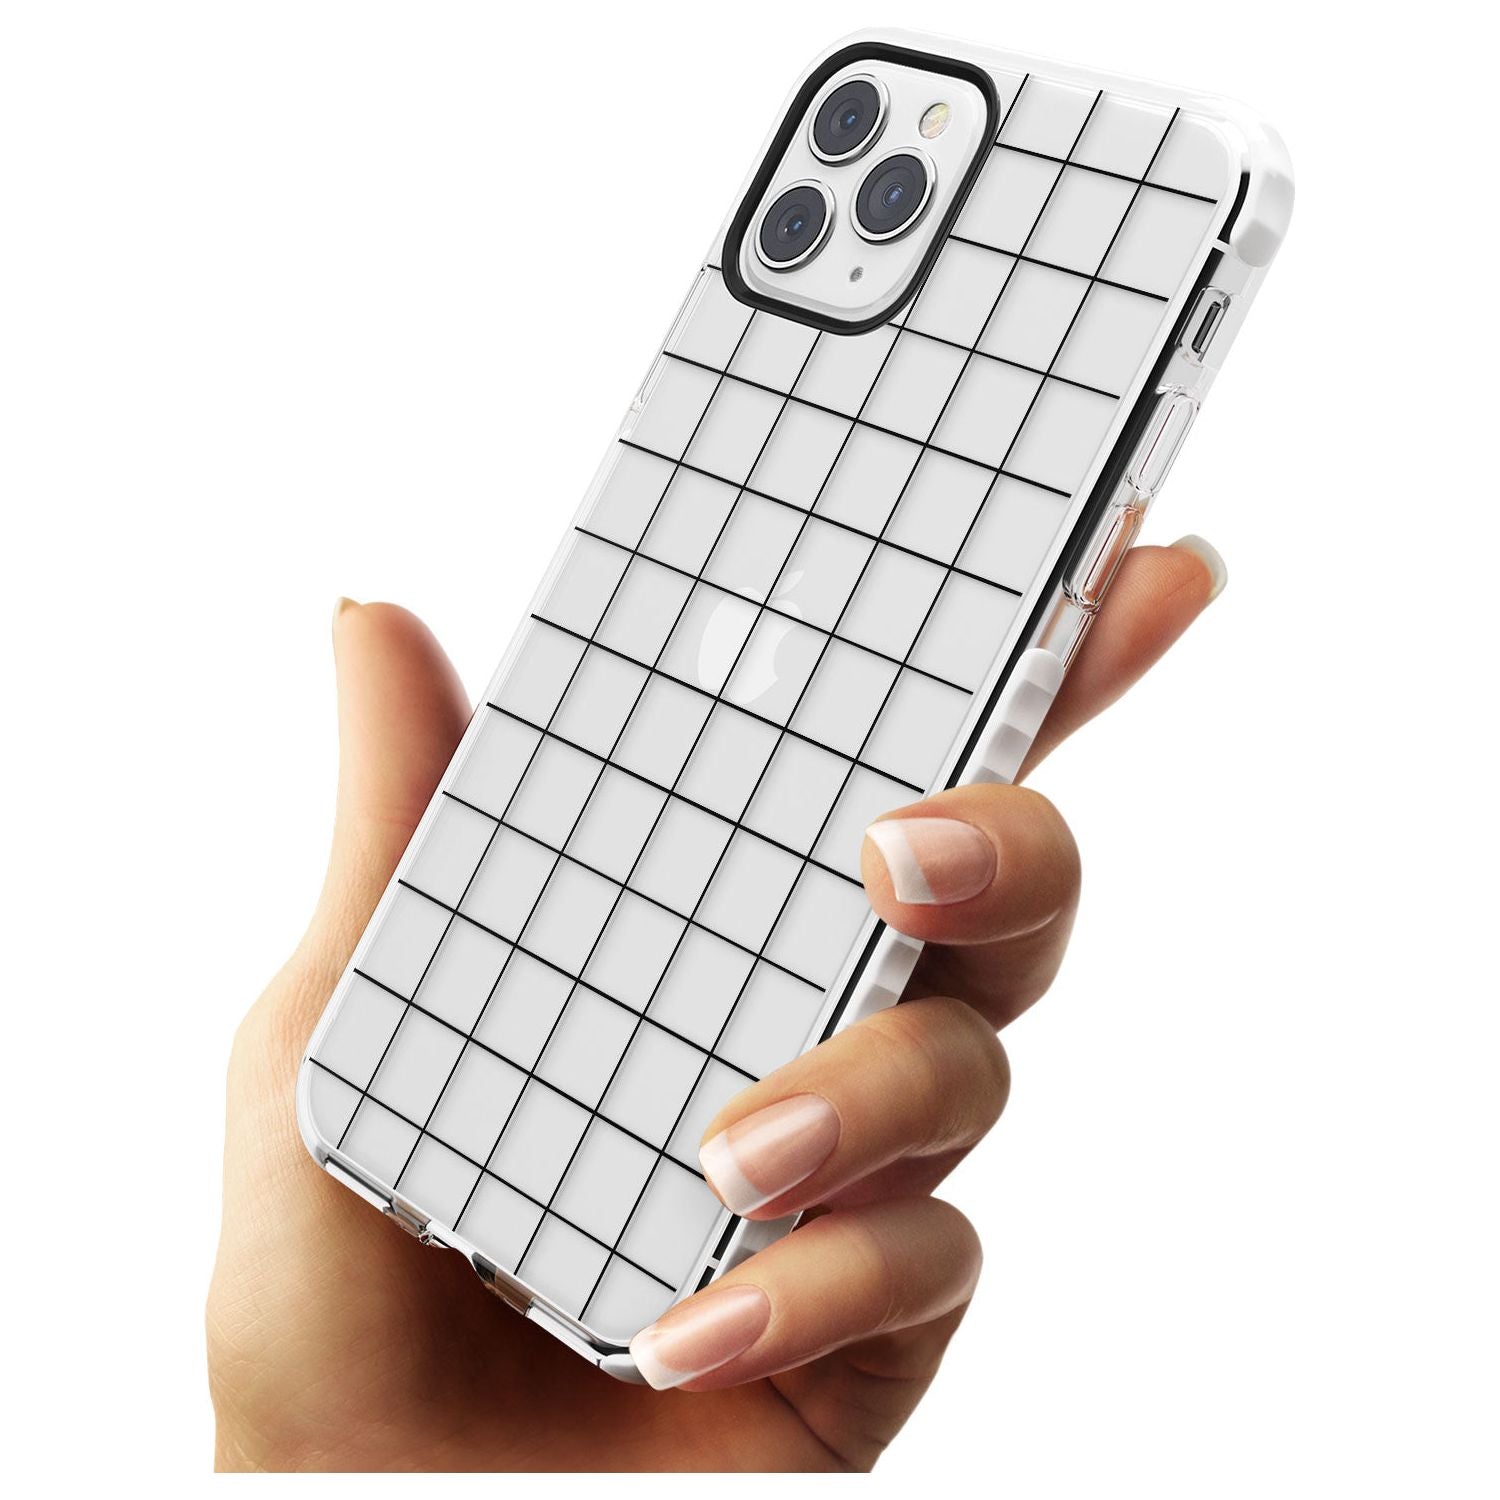 Simplistic Large Grid Pattern Black (Transparent) Impact Phone Case for iPhone 11 Pro Max